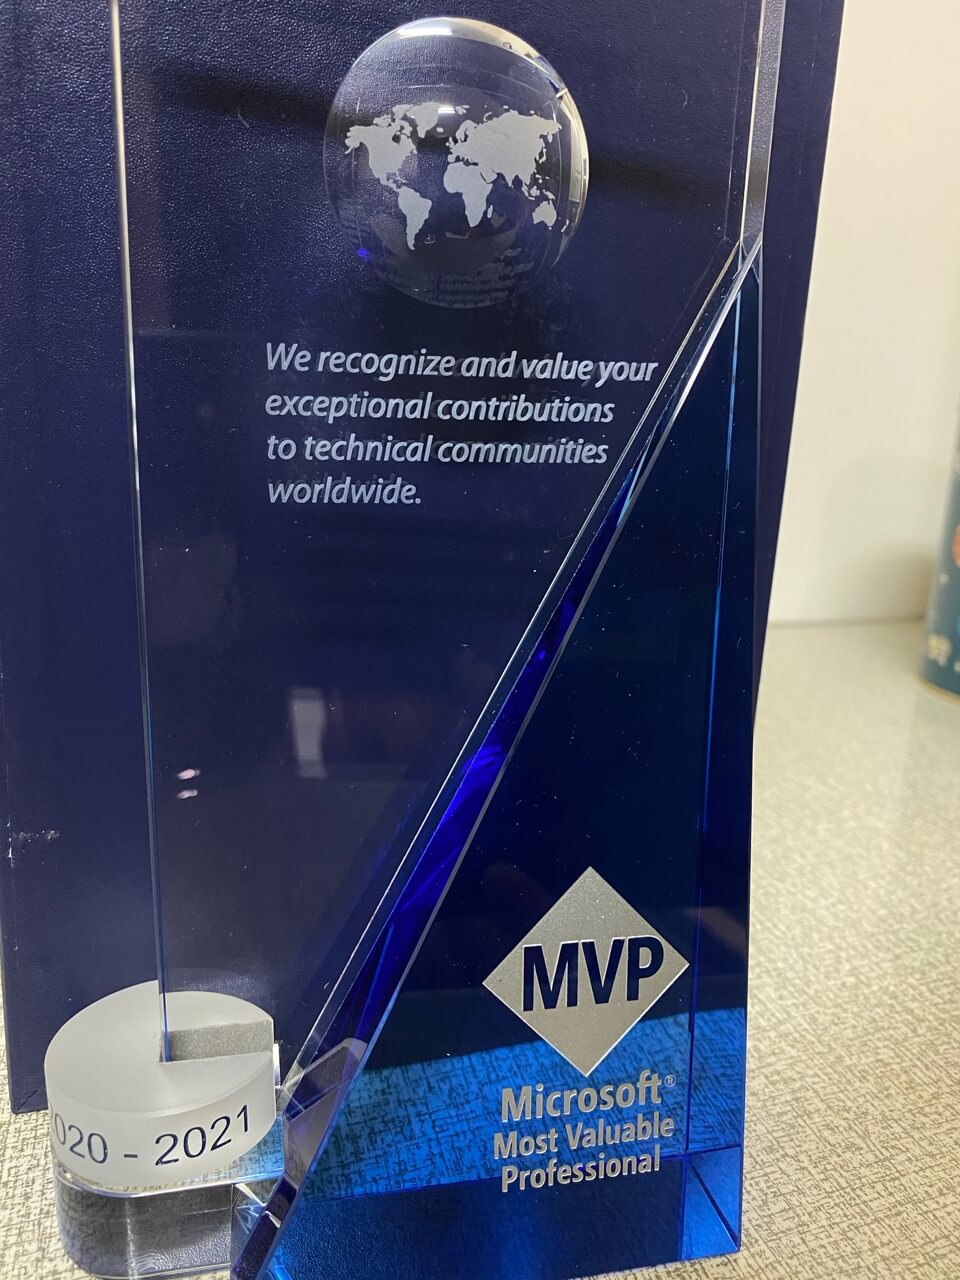 Ko Ko Microsoft MVP Award trophy